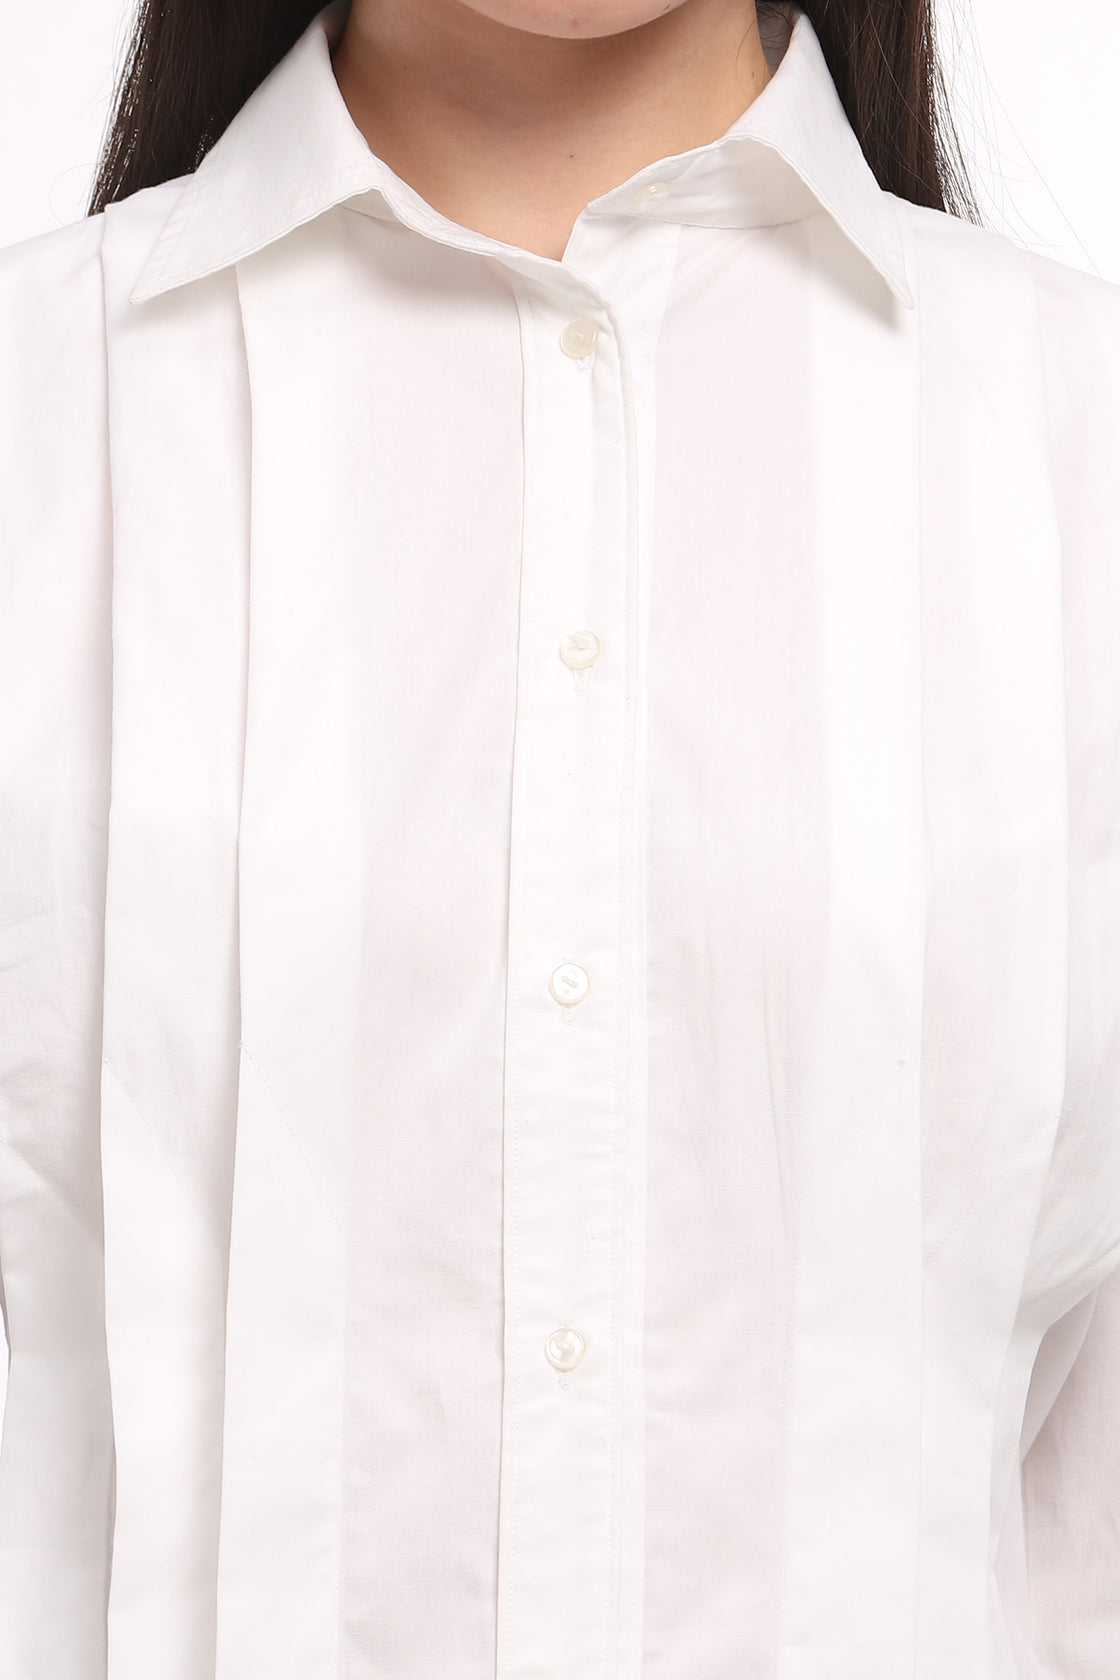 Sia Pleated White Shirt